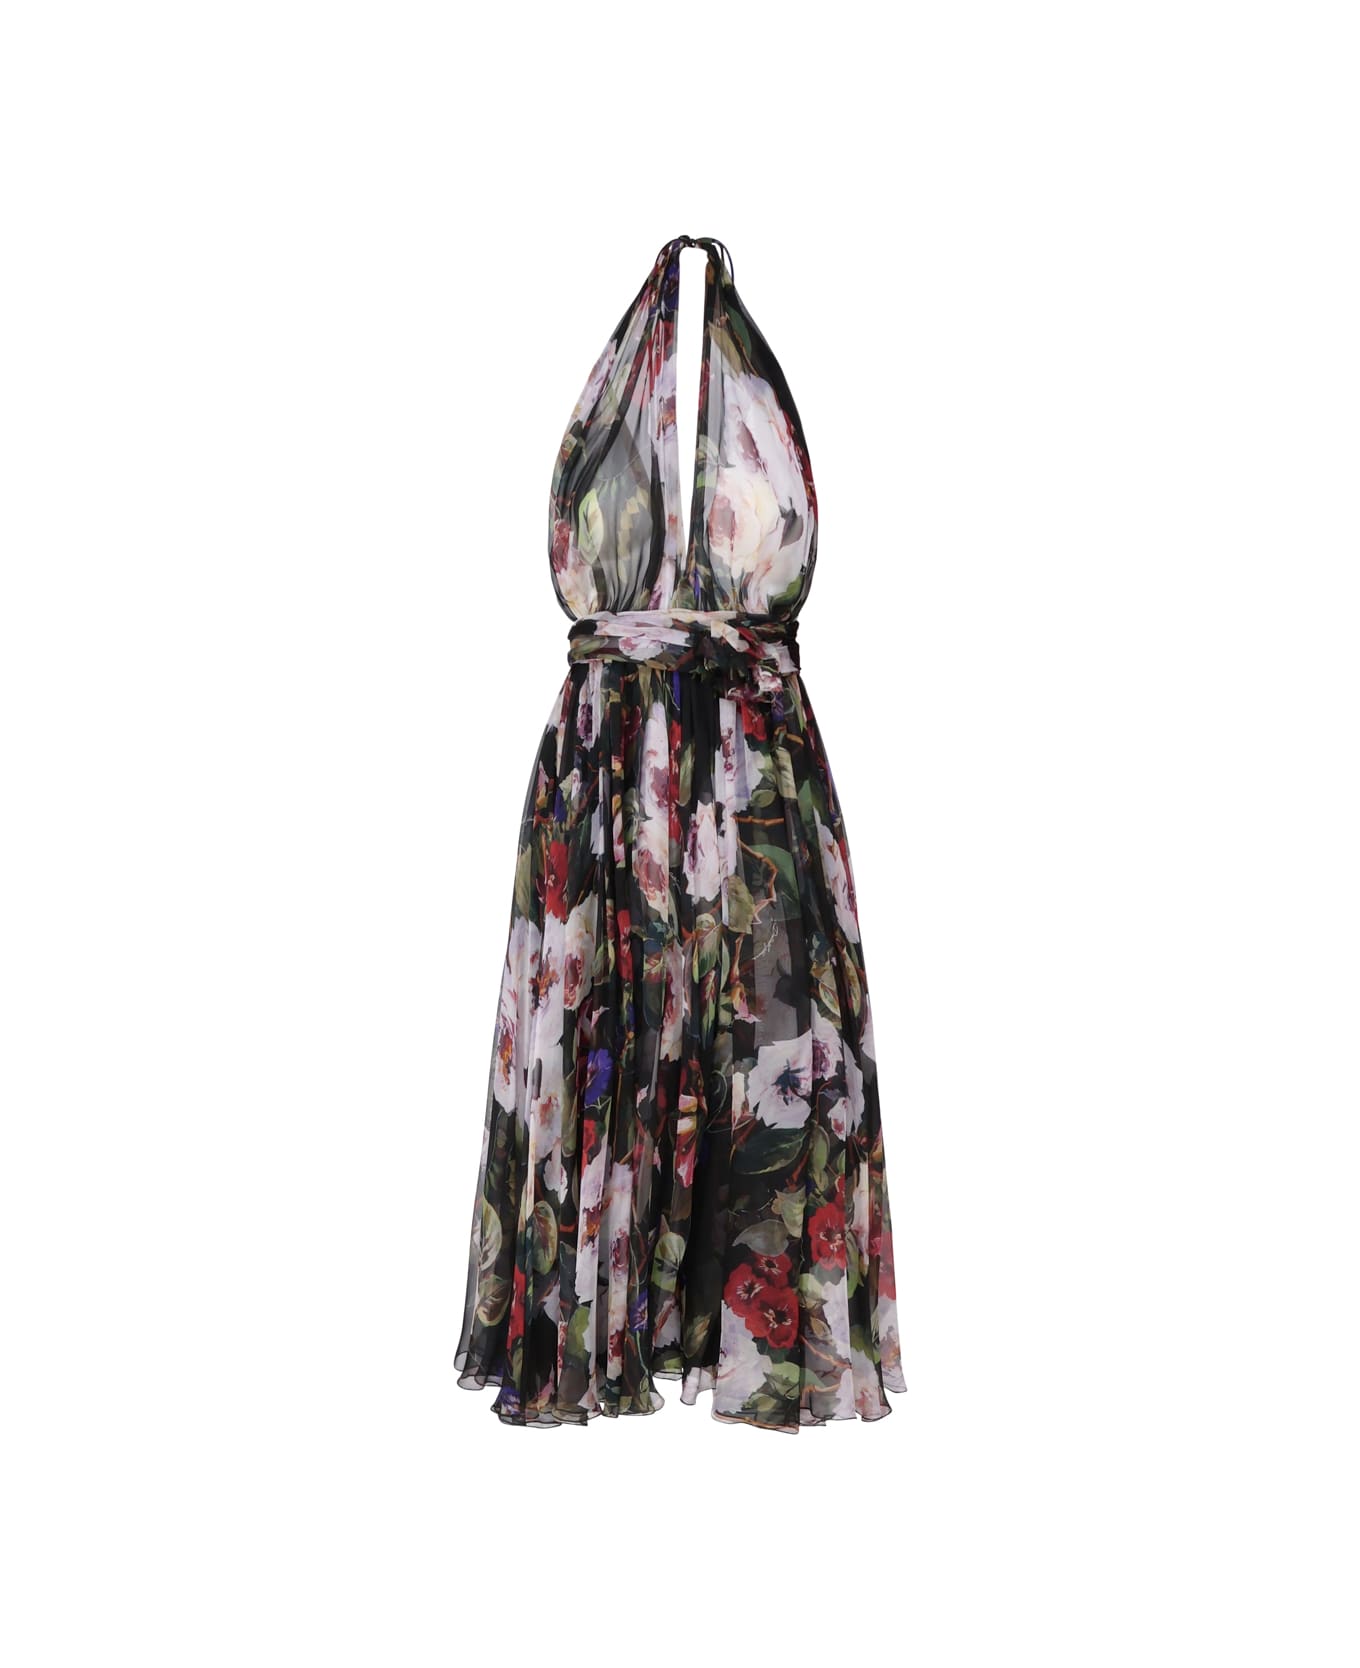 Dolce & Gabbana Rose Garden Print Silk Chiffon Longuette Dress - Multicolor